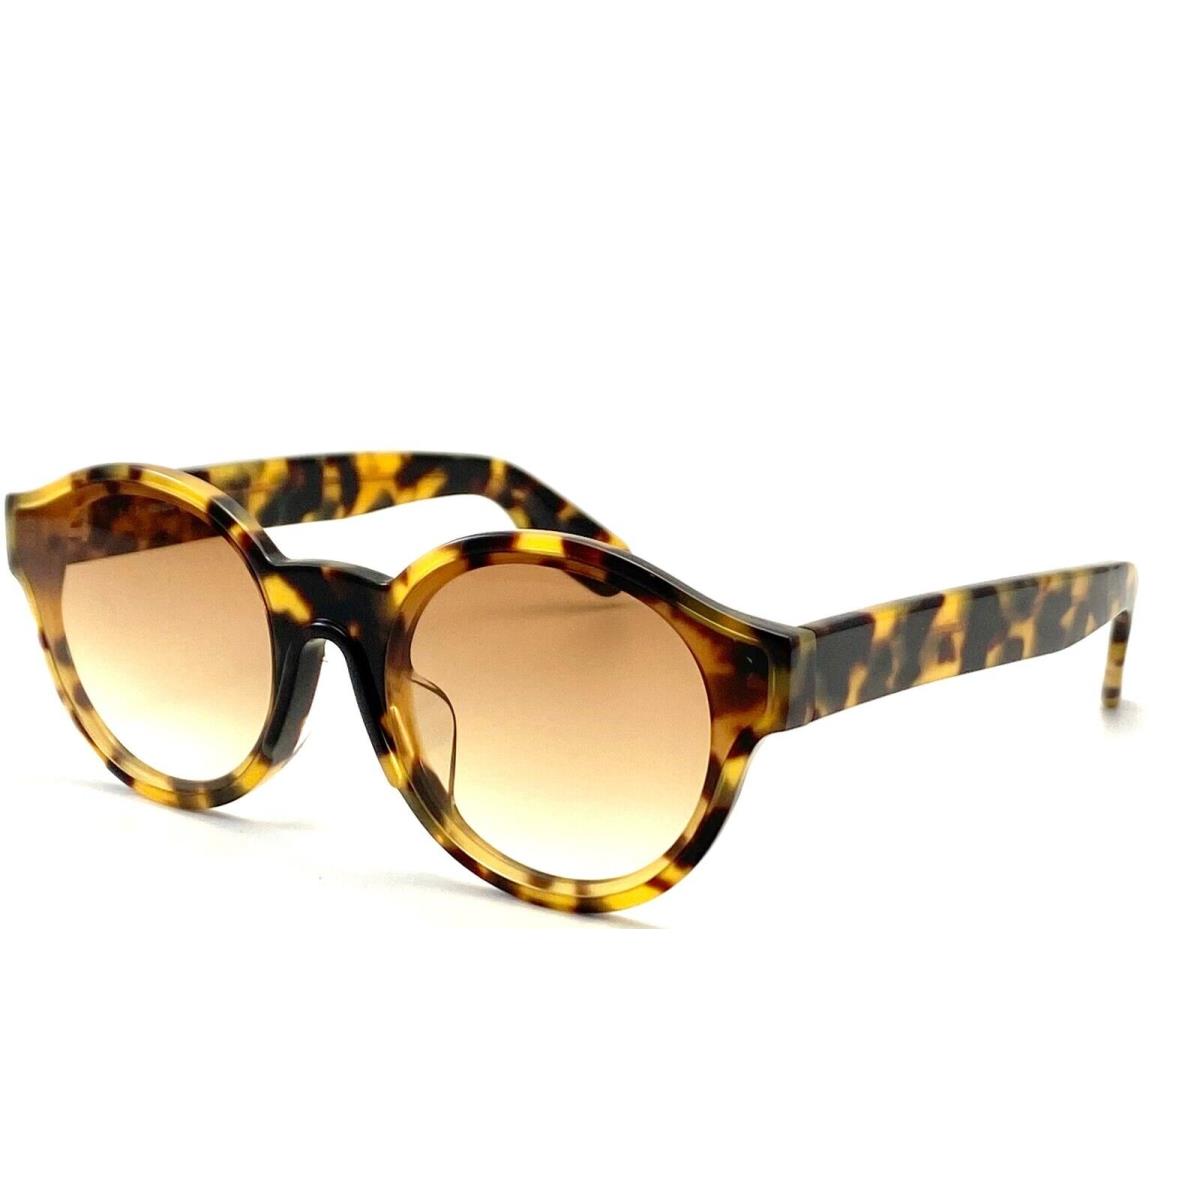 Kenzo Paris KZ40008F 53F Brown Sunglasses 60-19 150 W/case